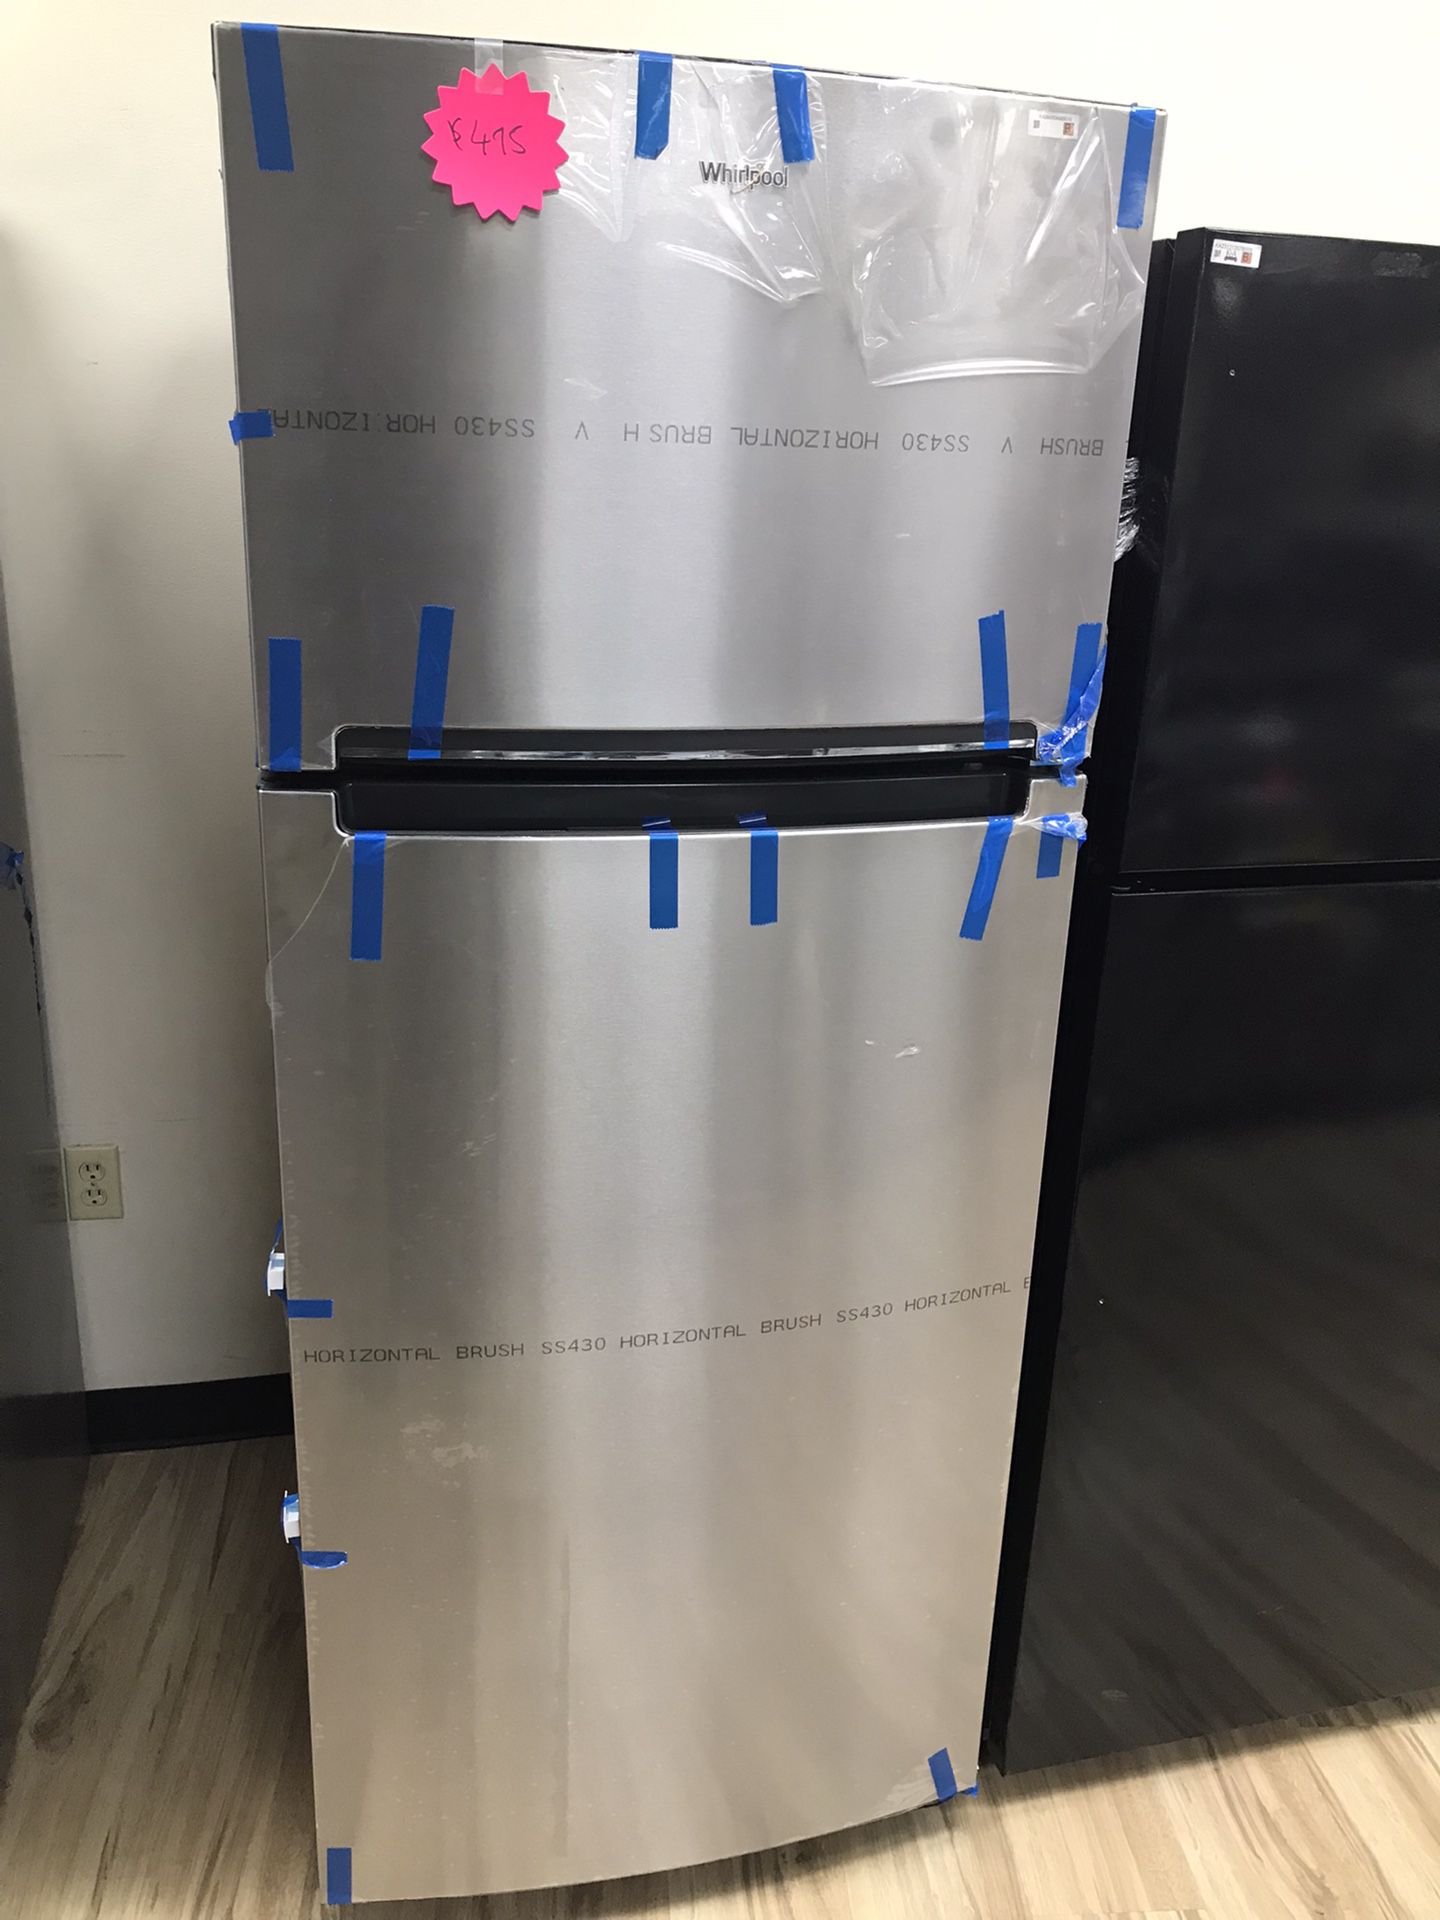 Whirpool Top Freezer Refrigerator In Stainless Steel